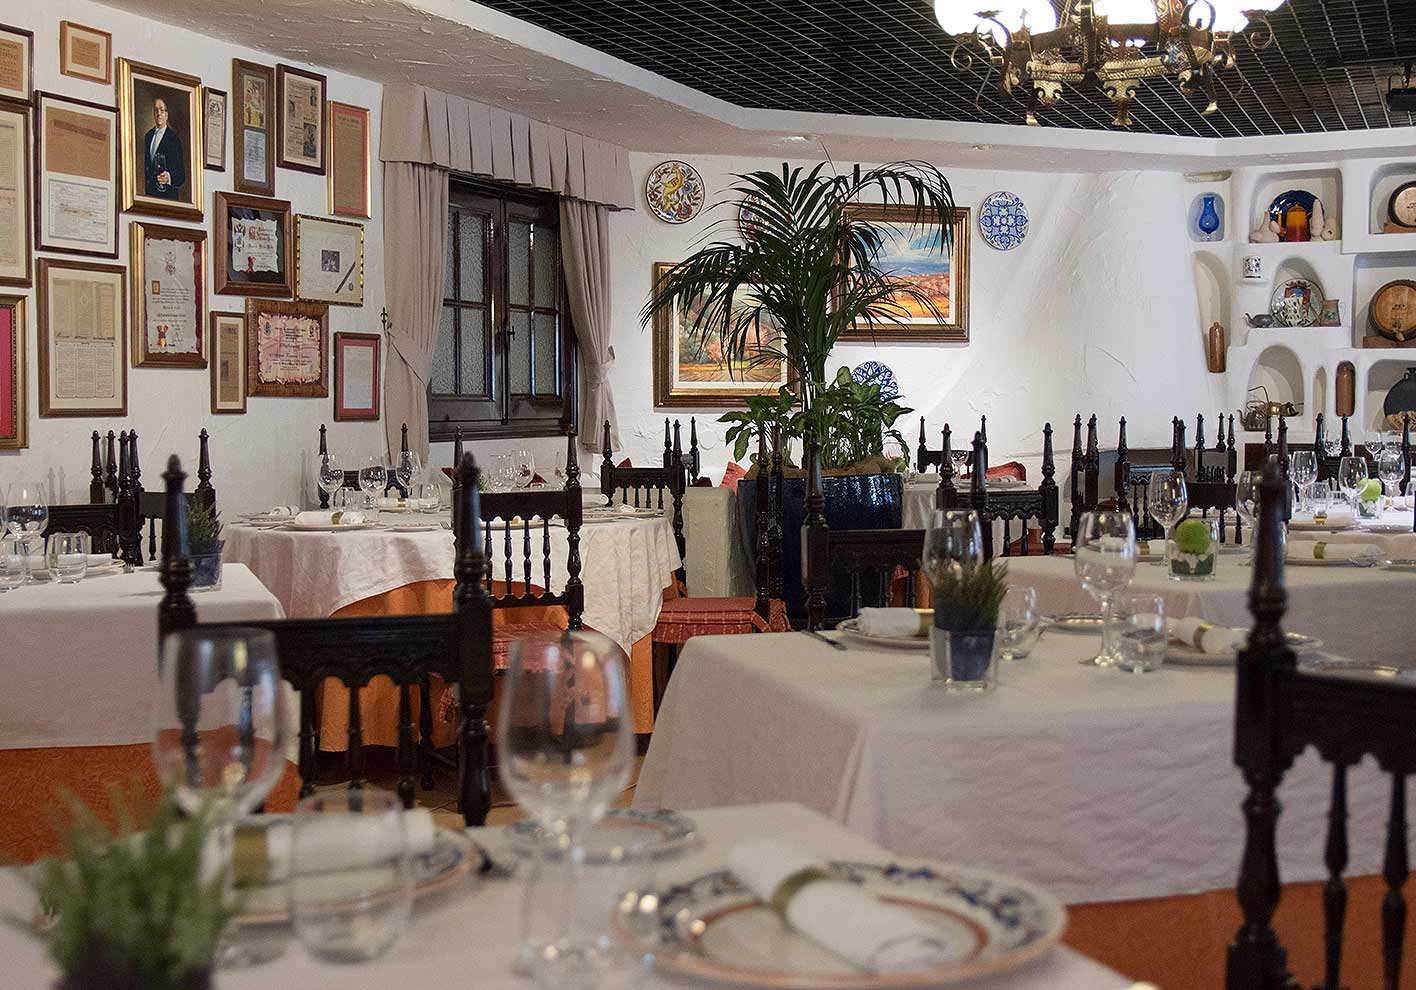 Main Dining Room 03 - Hotel Restaurante Terraza Carmona in Vera, Almeria